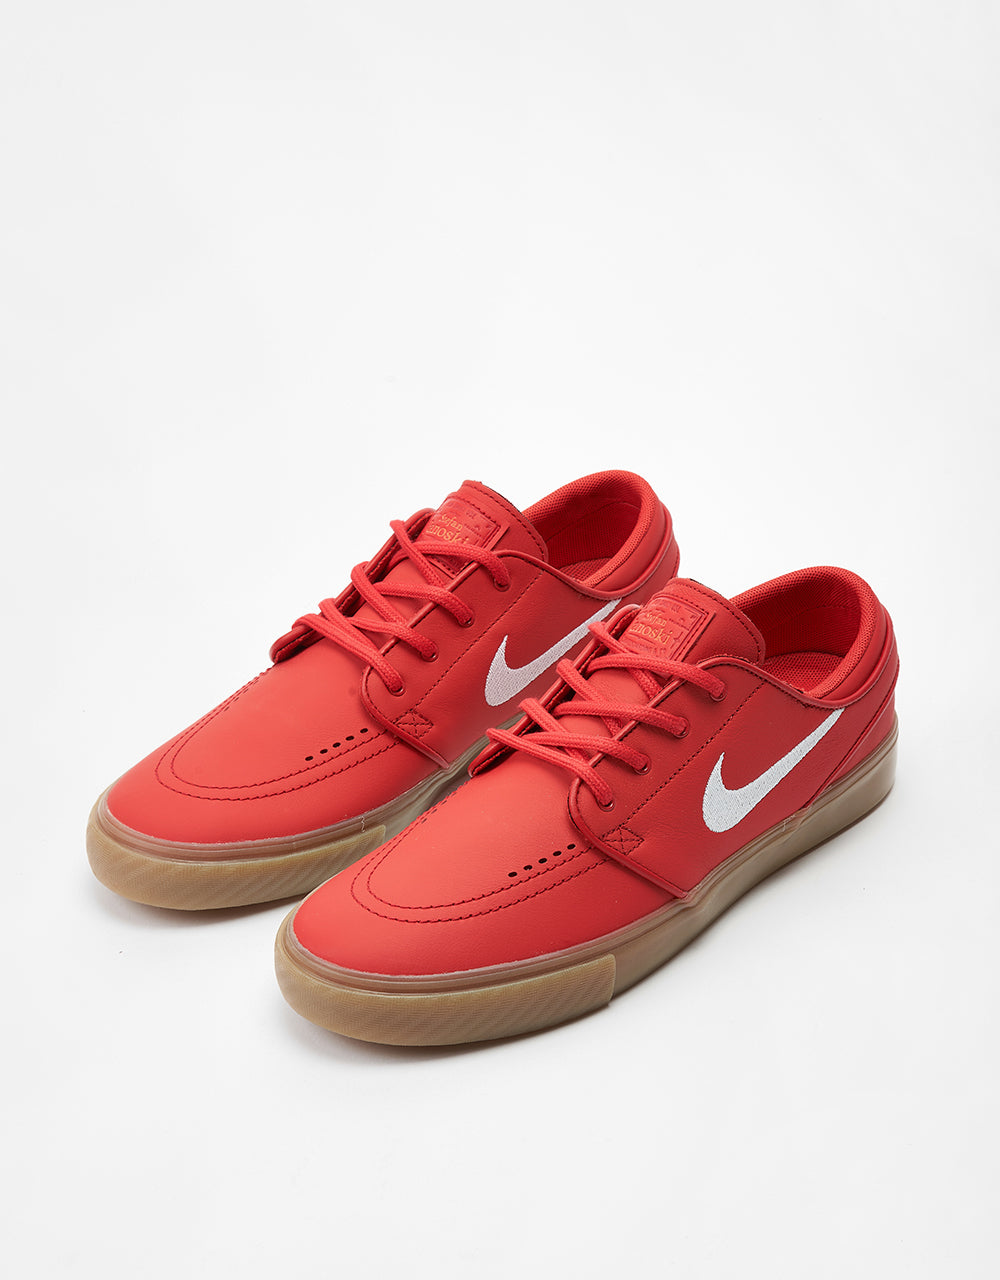 Nike SB Zoom Janoski ISO Skate Shoes - Unviversity Red/White-Universiy Red-Gum Lt Brown